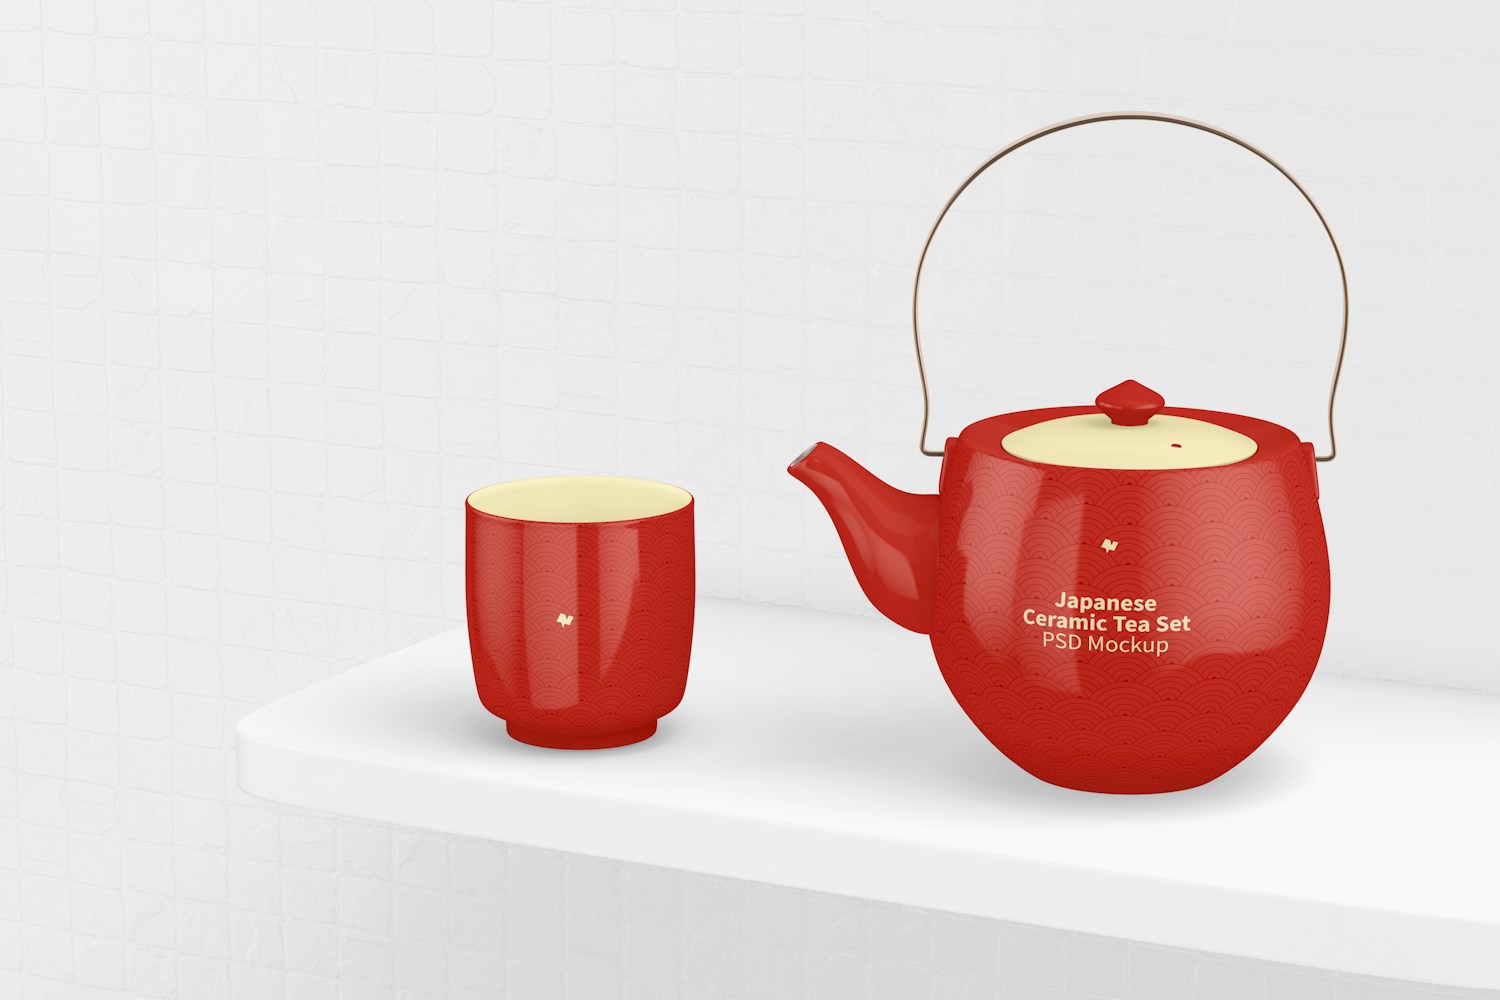 Japanese Ceramic Tea Set Mockup, Perspective View